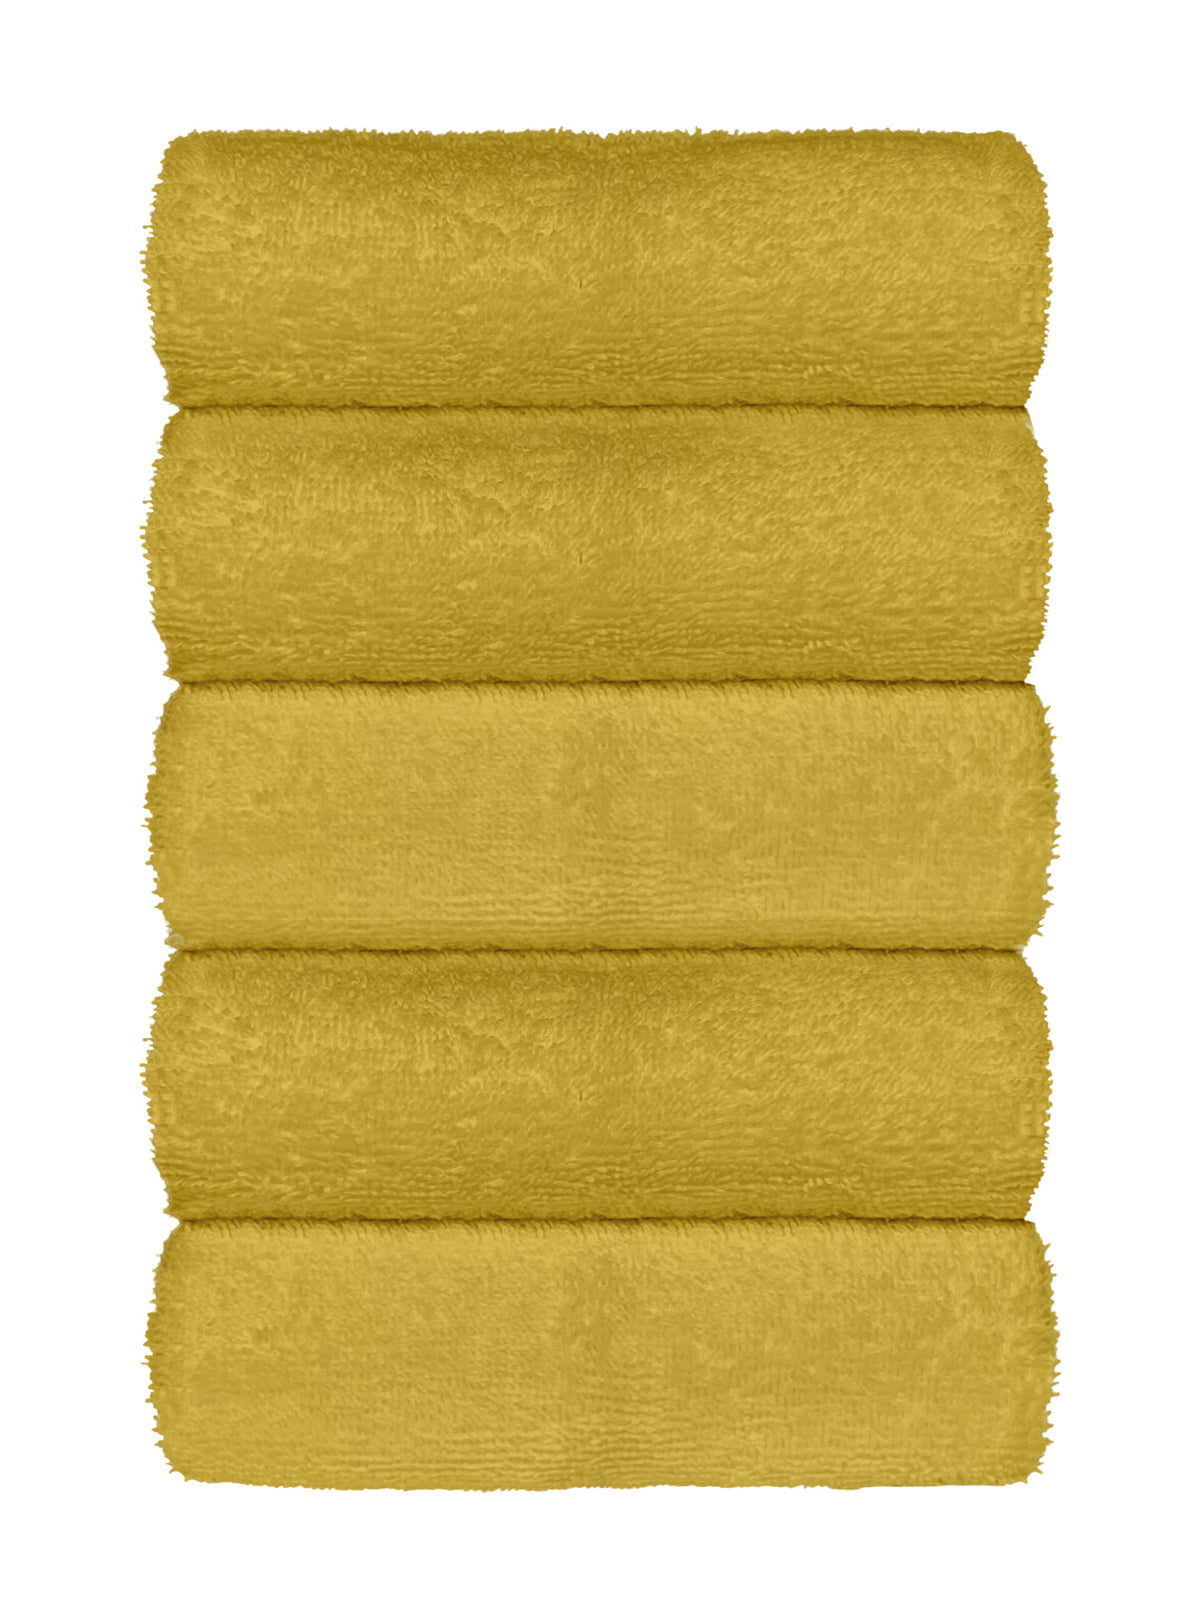 Set Asciugamani Bagno 100% Cotone Super Assorbenti Telo Doccia Spugna Professionali Salvietta Lavetta Viso Asciugamano Teli Asciugamano - Oro